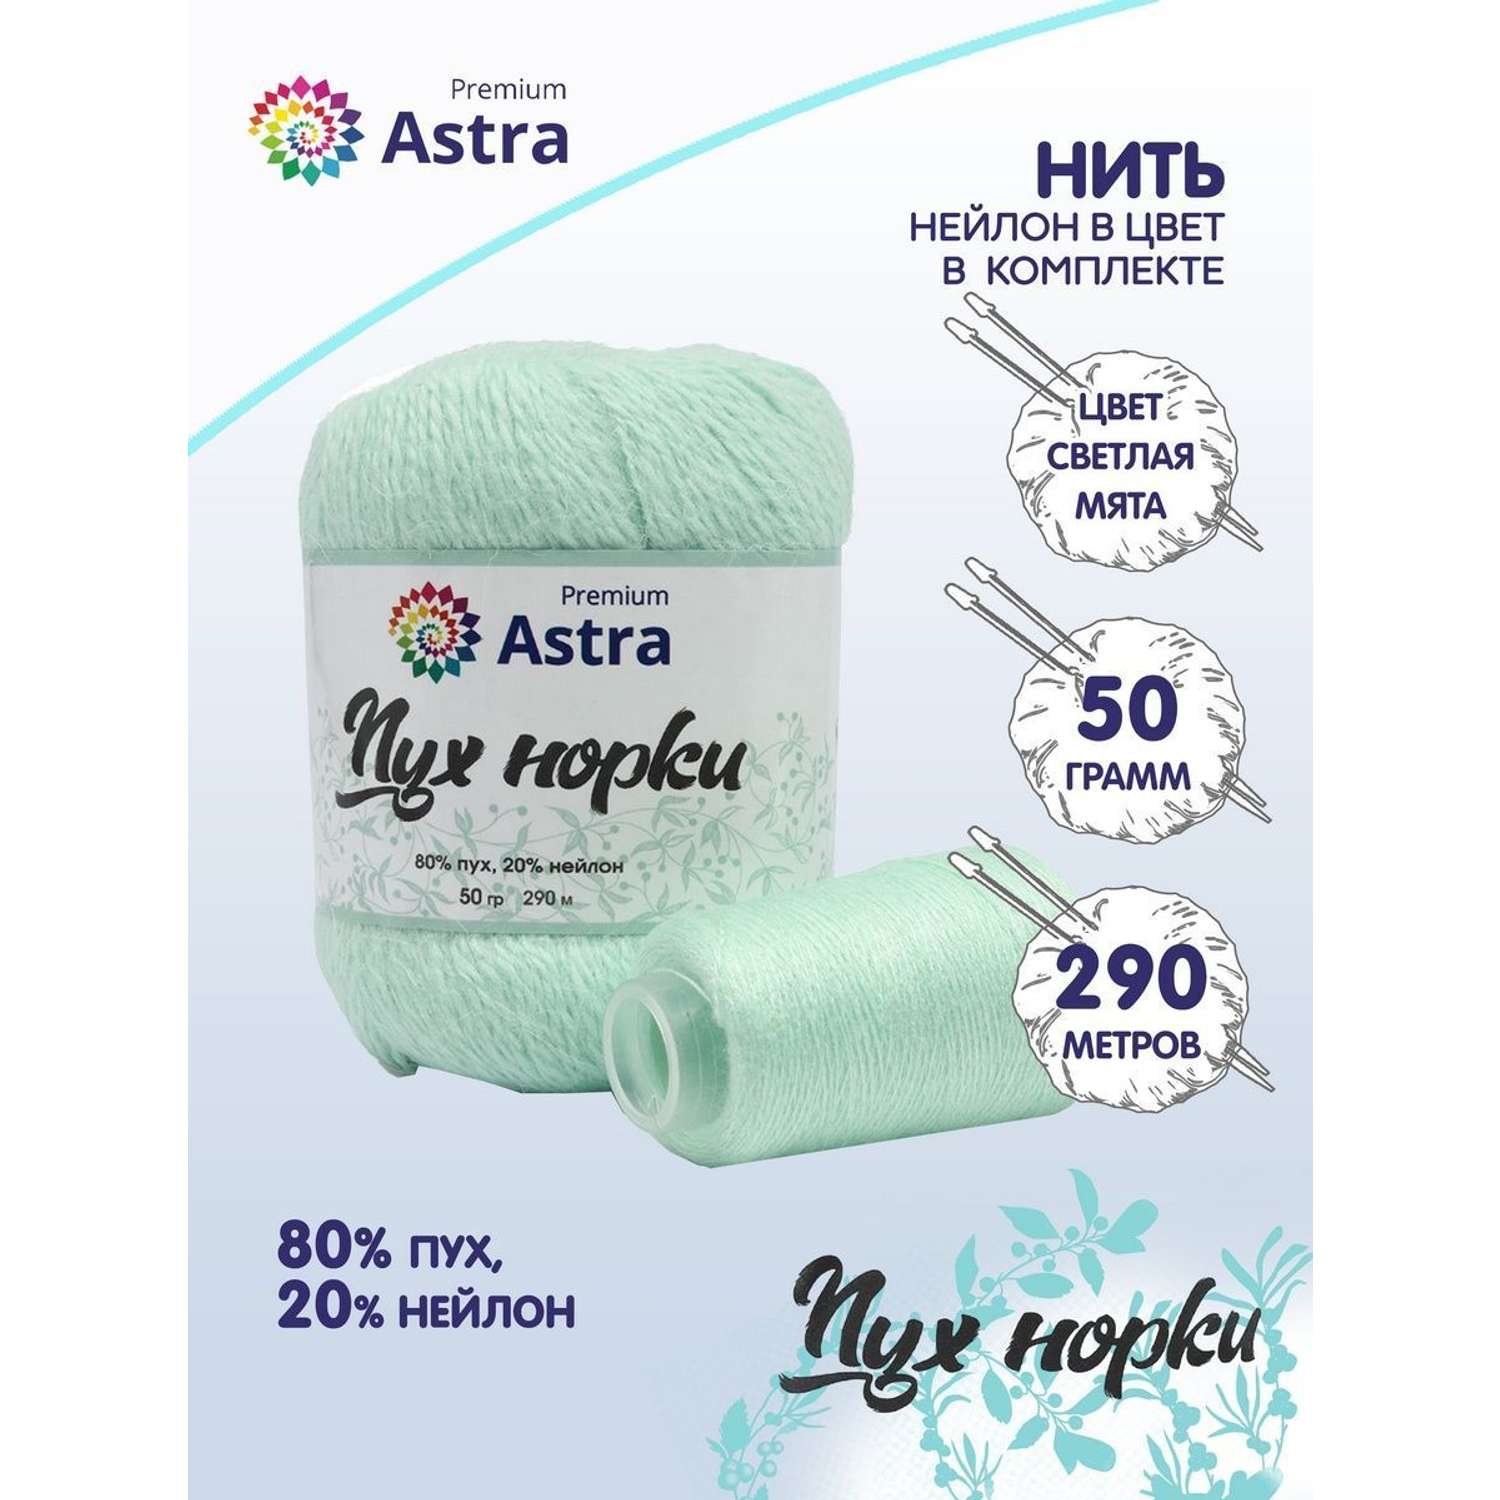 Пряжа Astra Premium Пух норки Mink yarn воздушная с ворсом 50 г 290 м 041 светлая мята 1 моток - фото 1